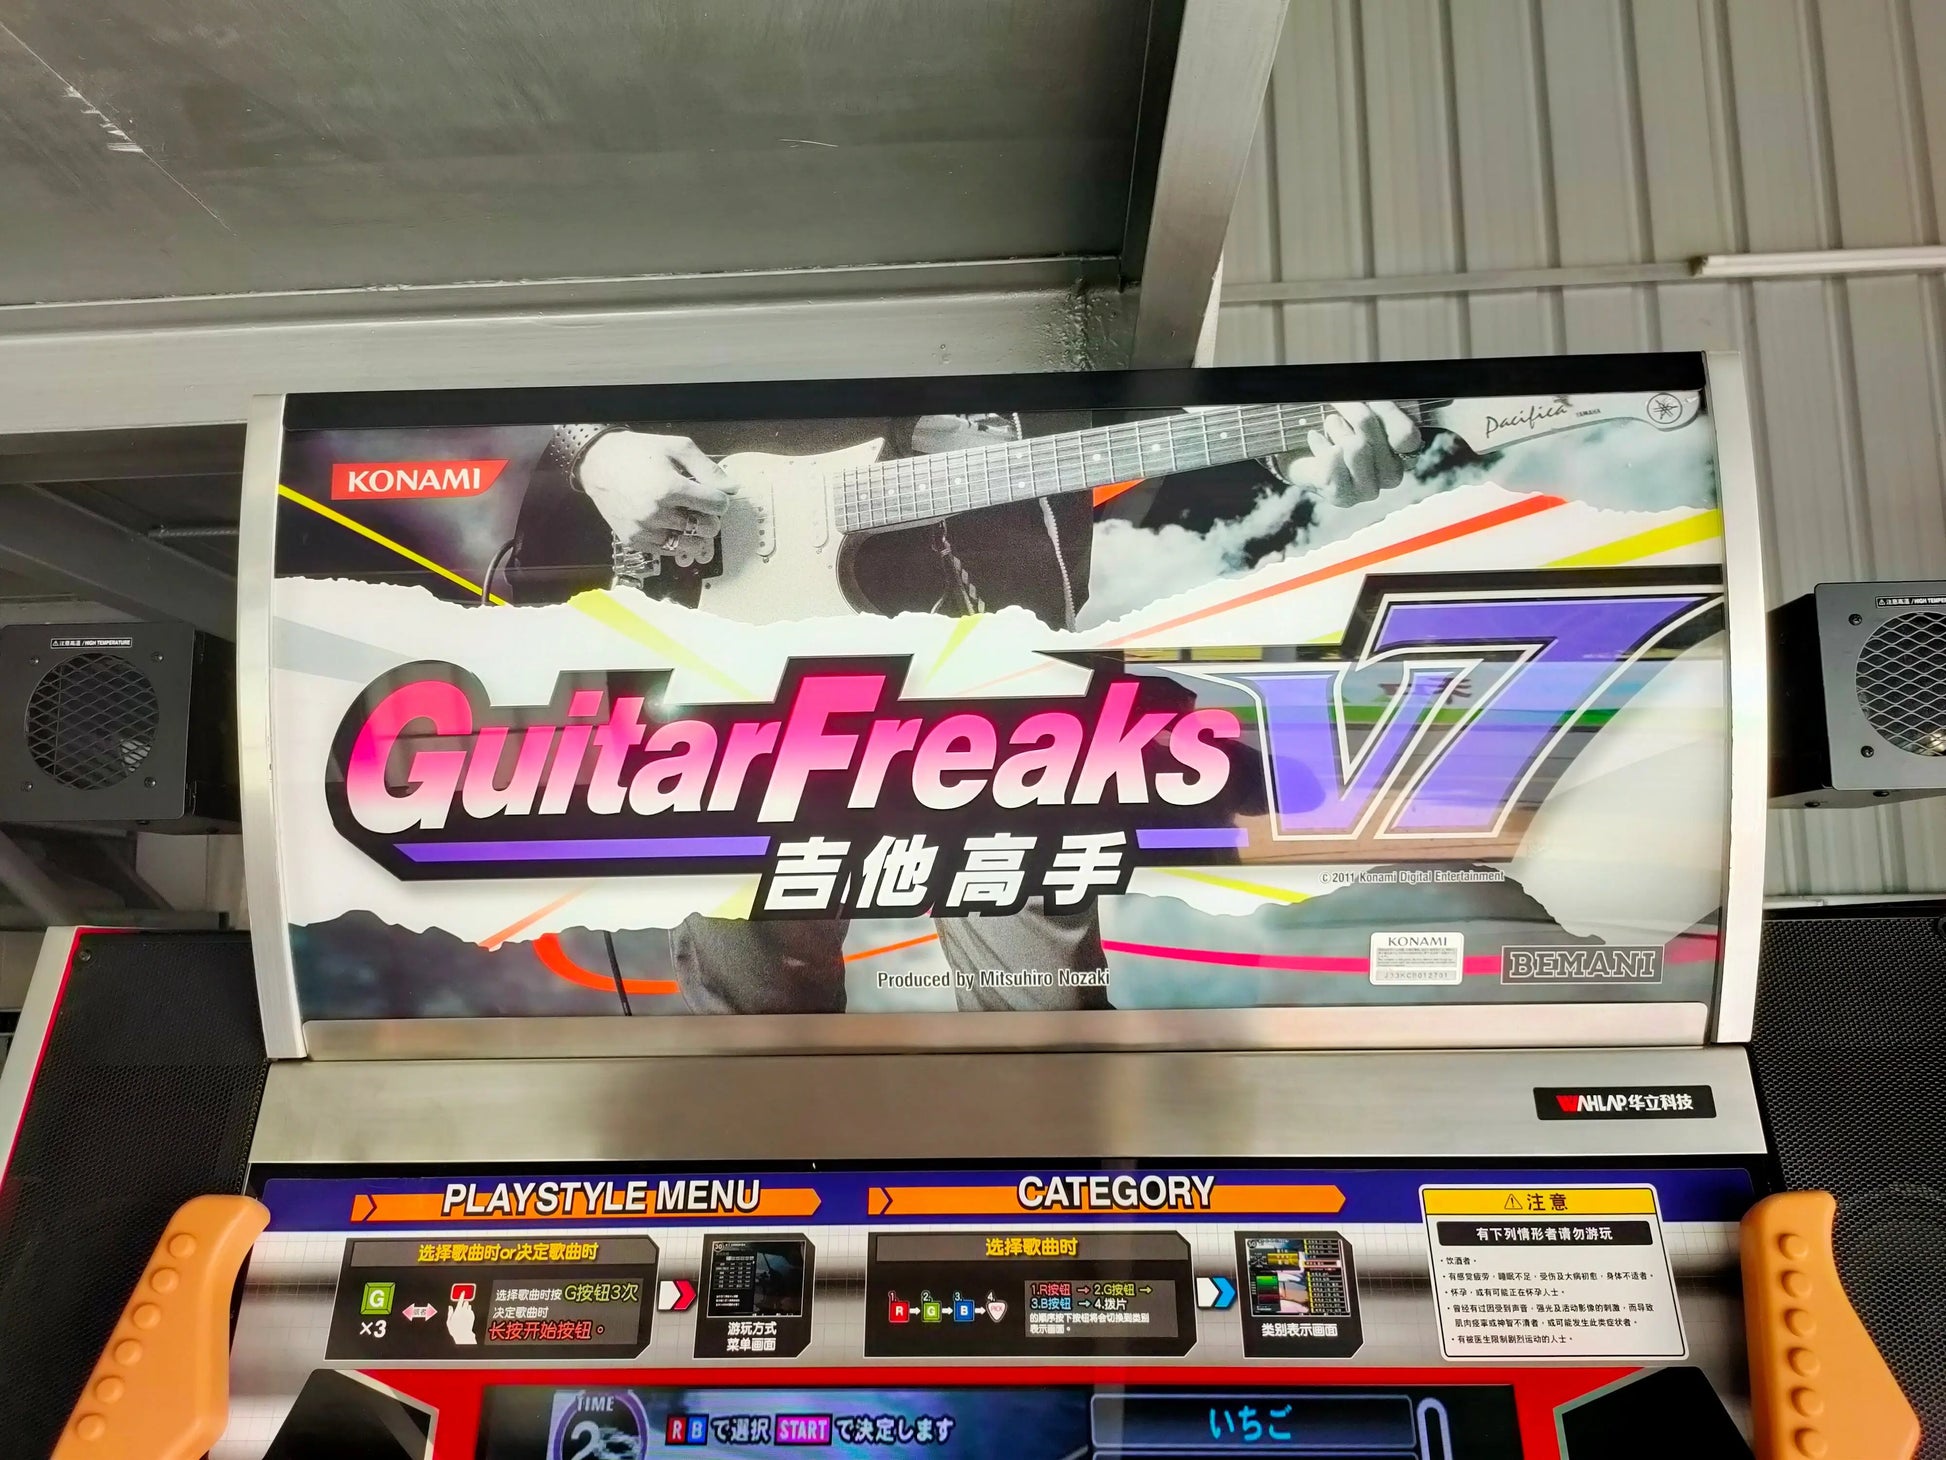 Guitar-Freaks-V-7-Rhythm-Games-Retro-KONAMI-Freaks-V7-Guitar-music-Arcade-Game-machine-Tomy-Arcade